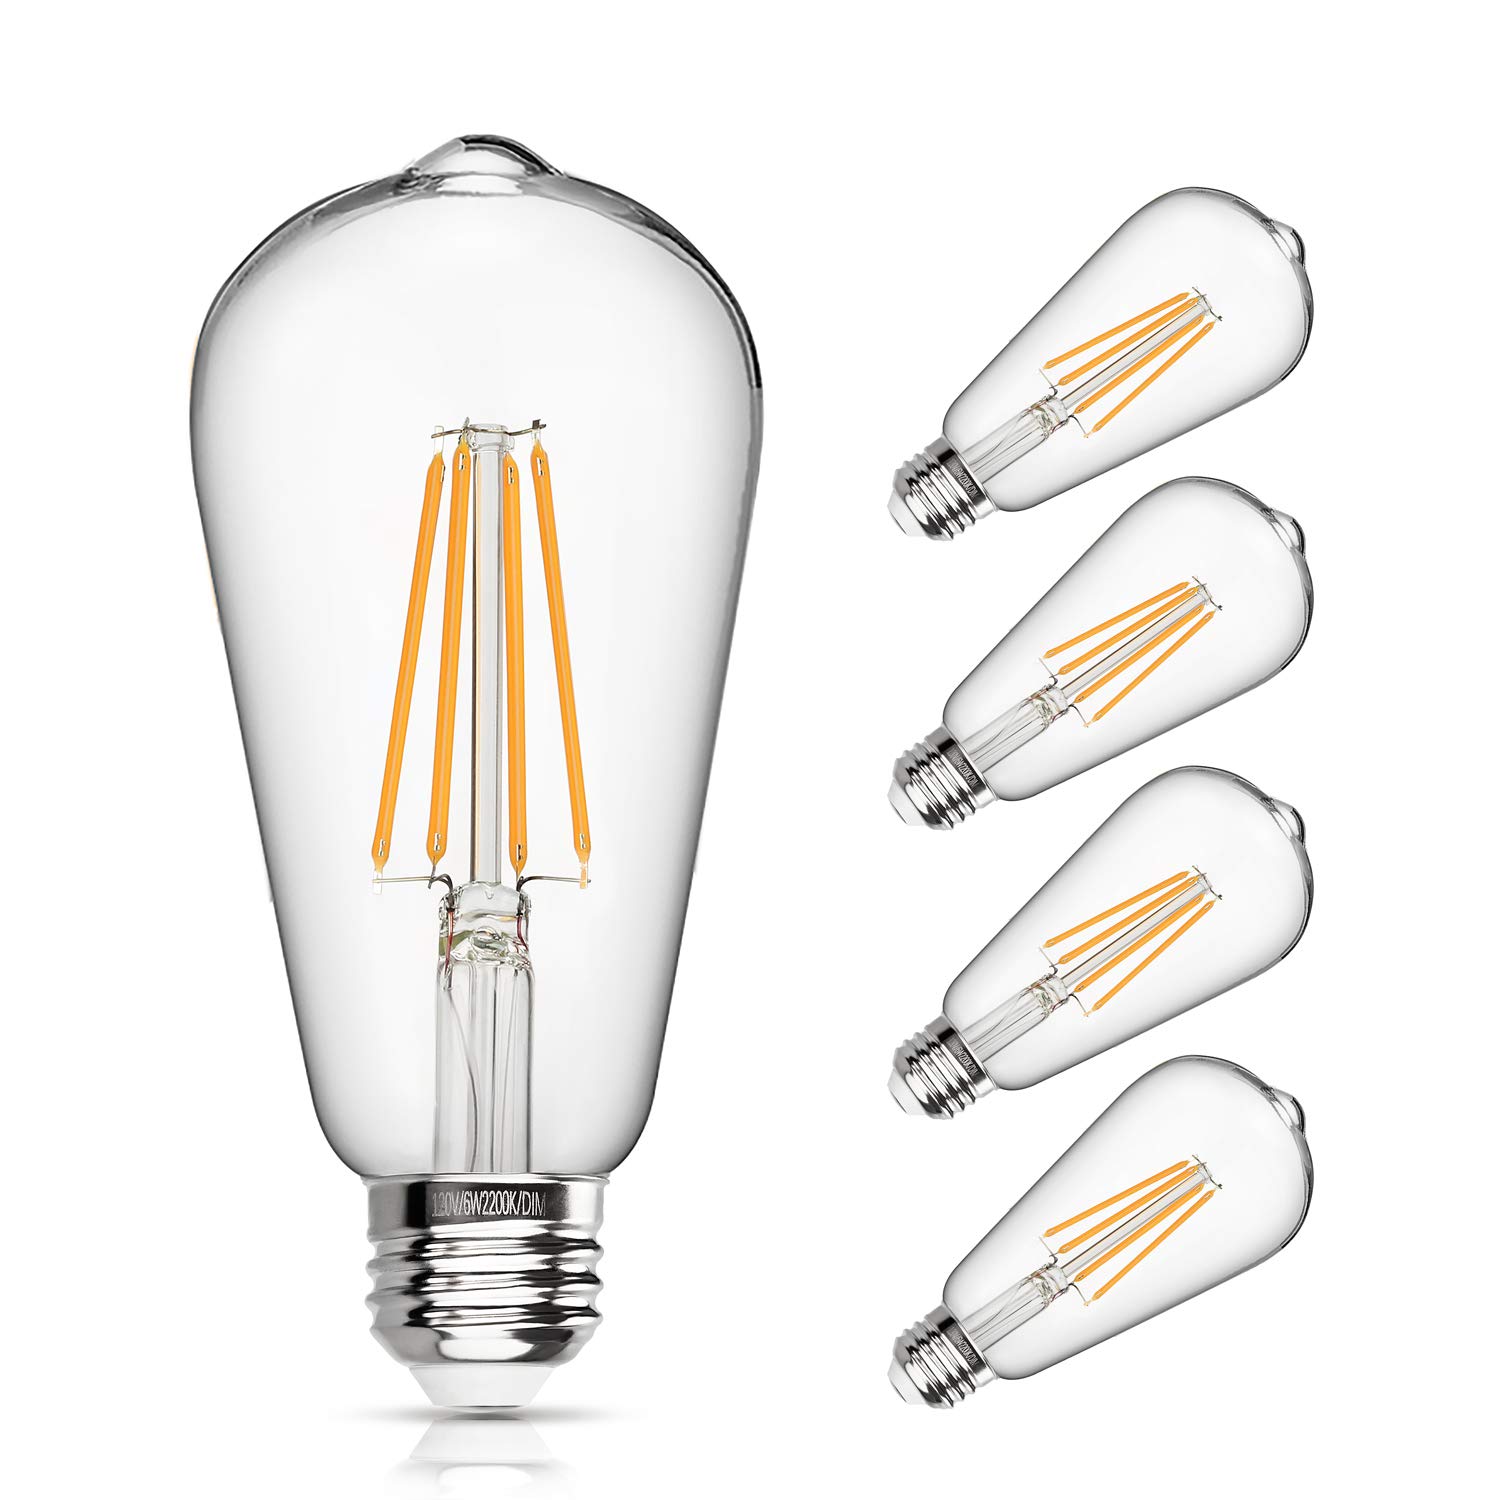 What Is Lowest Watt LED Bulb